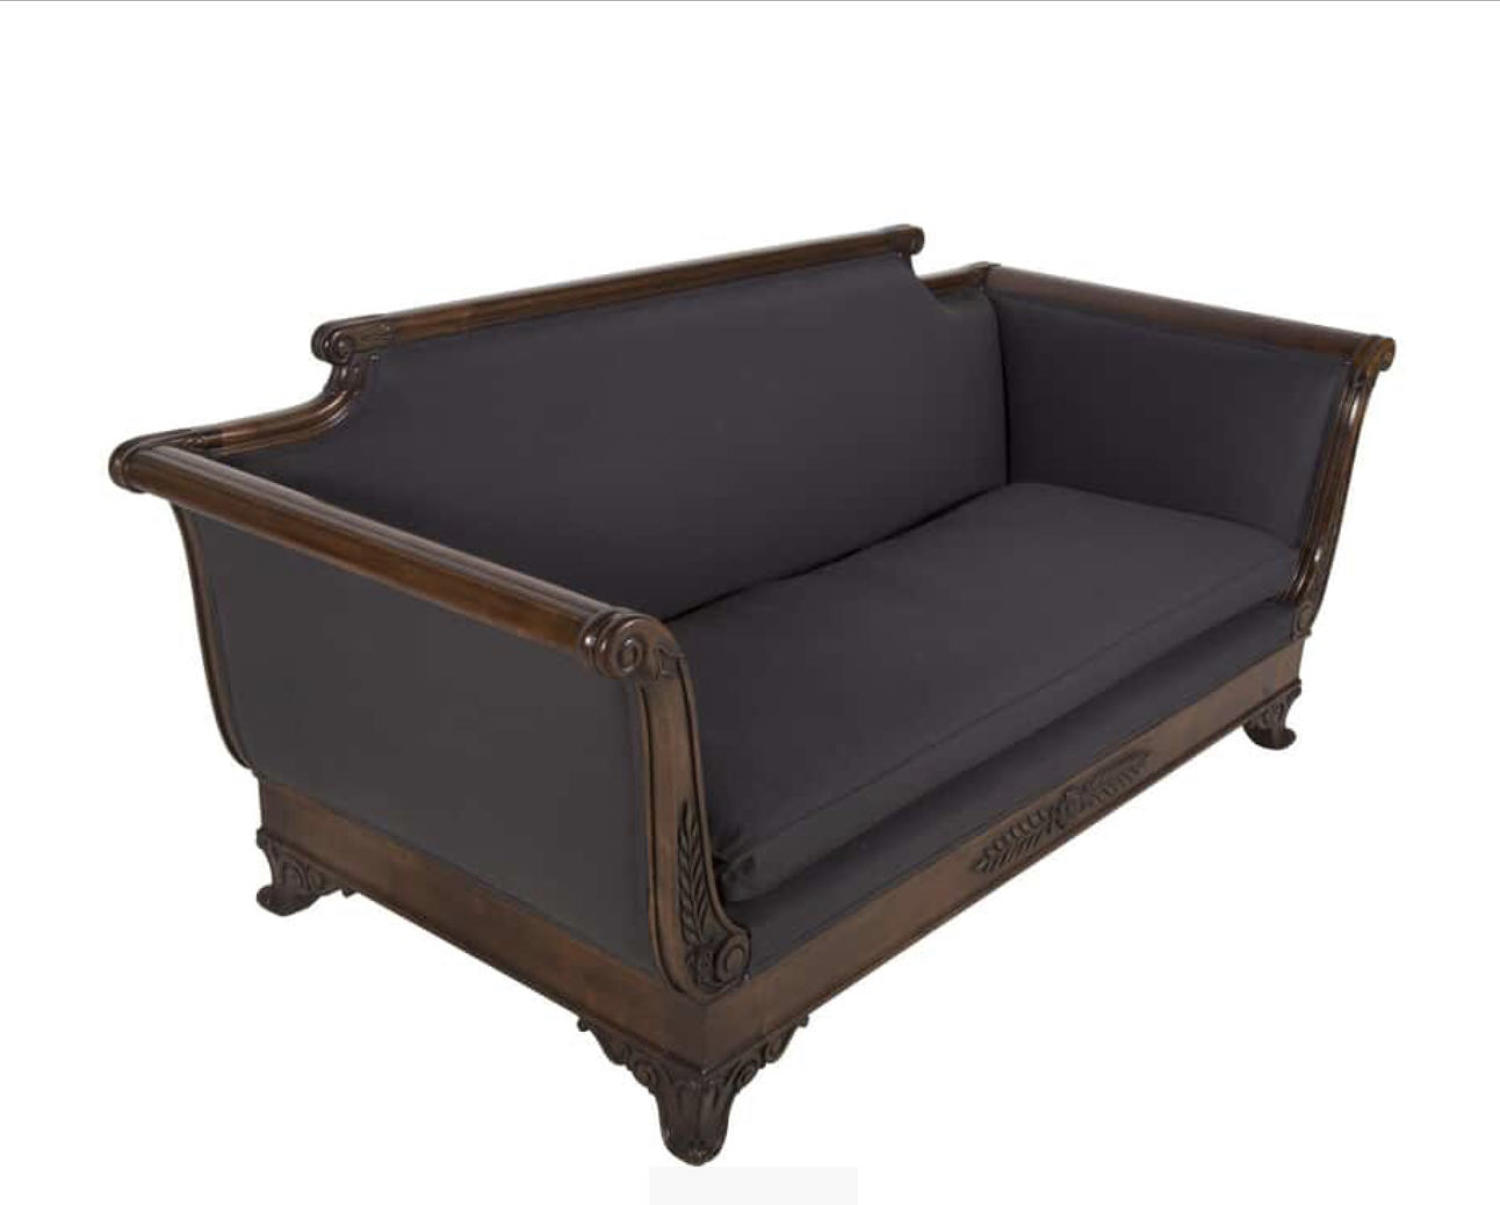 A Louis Phillipe style sofa